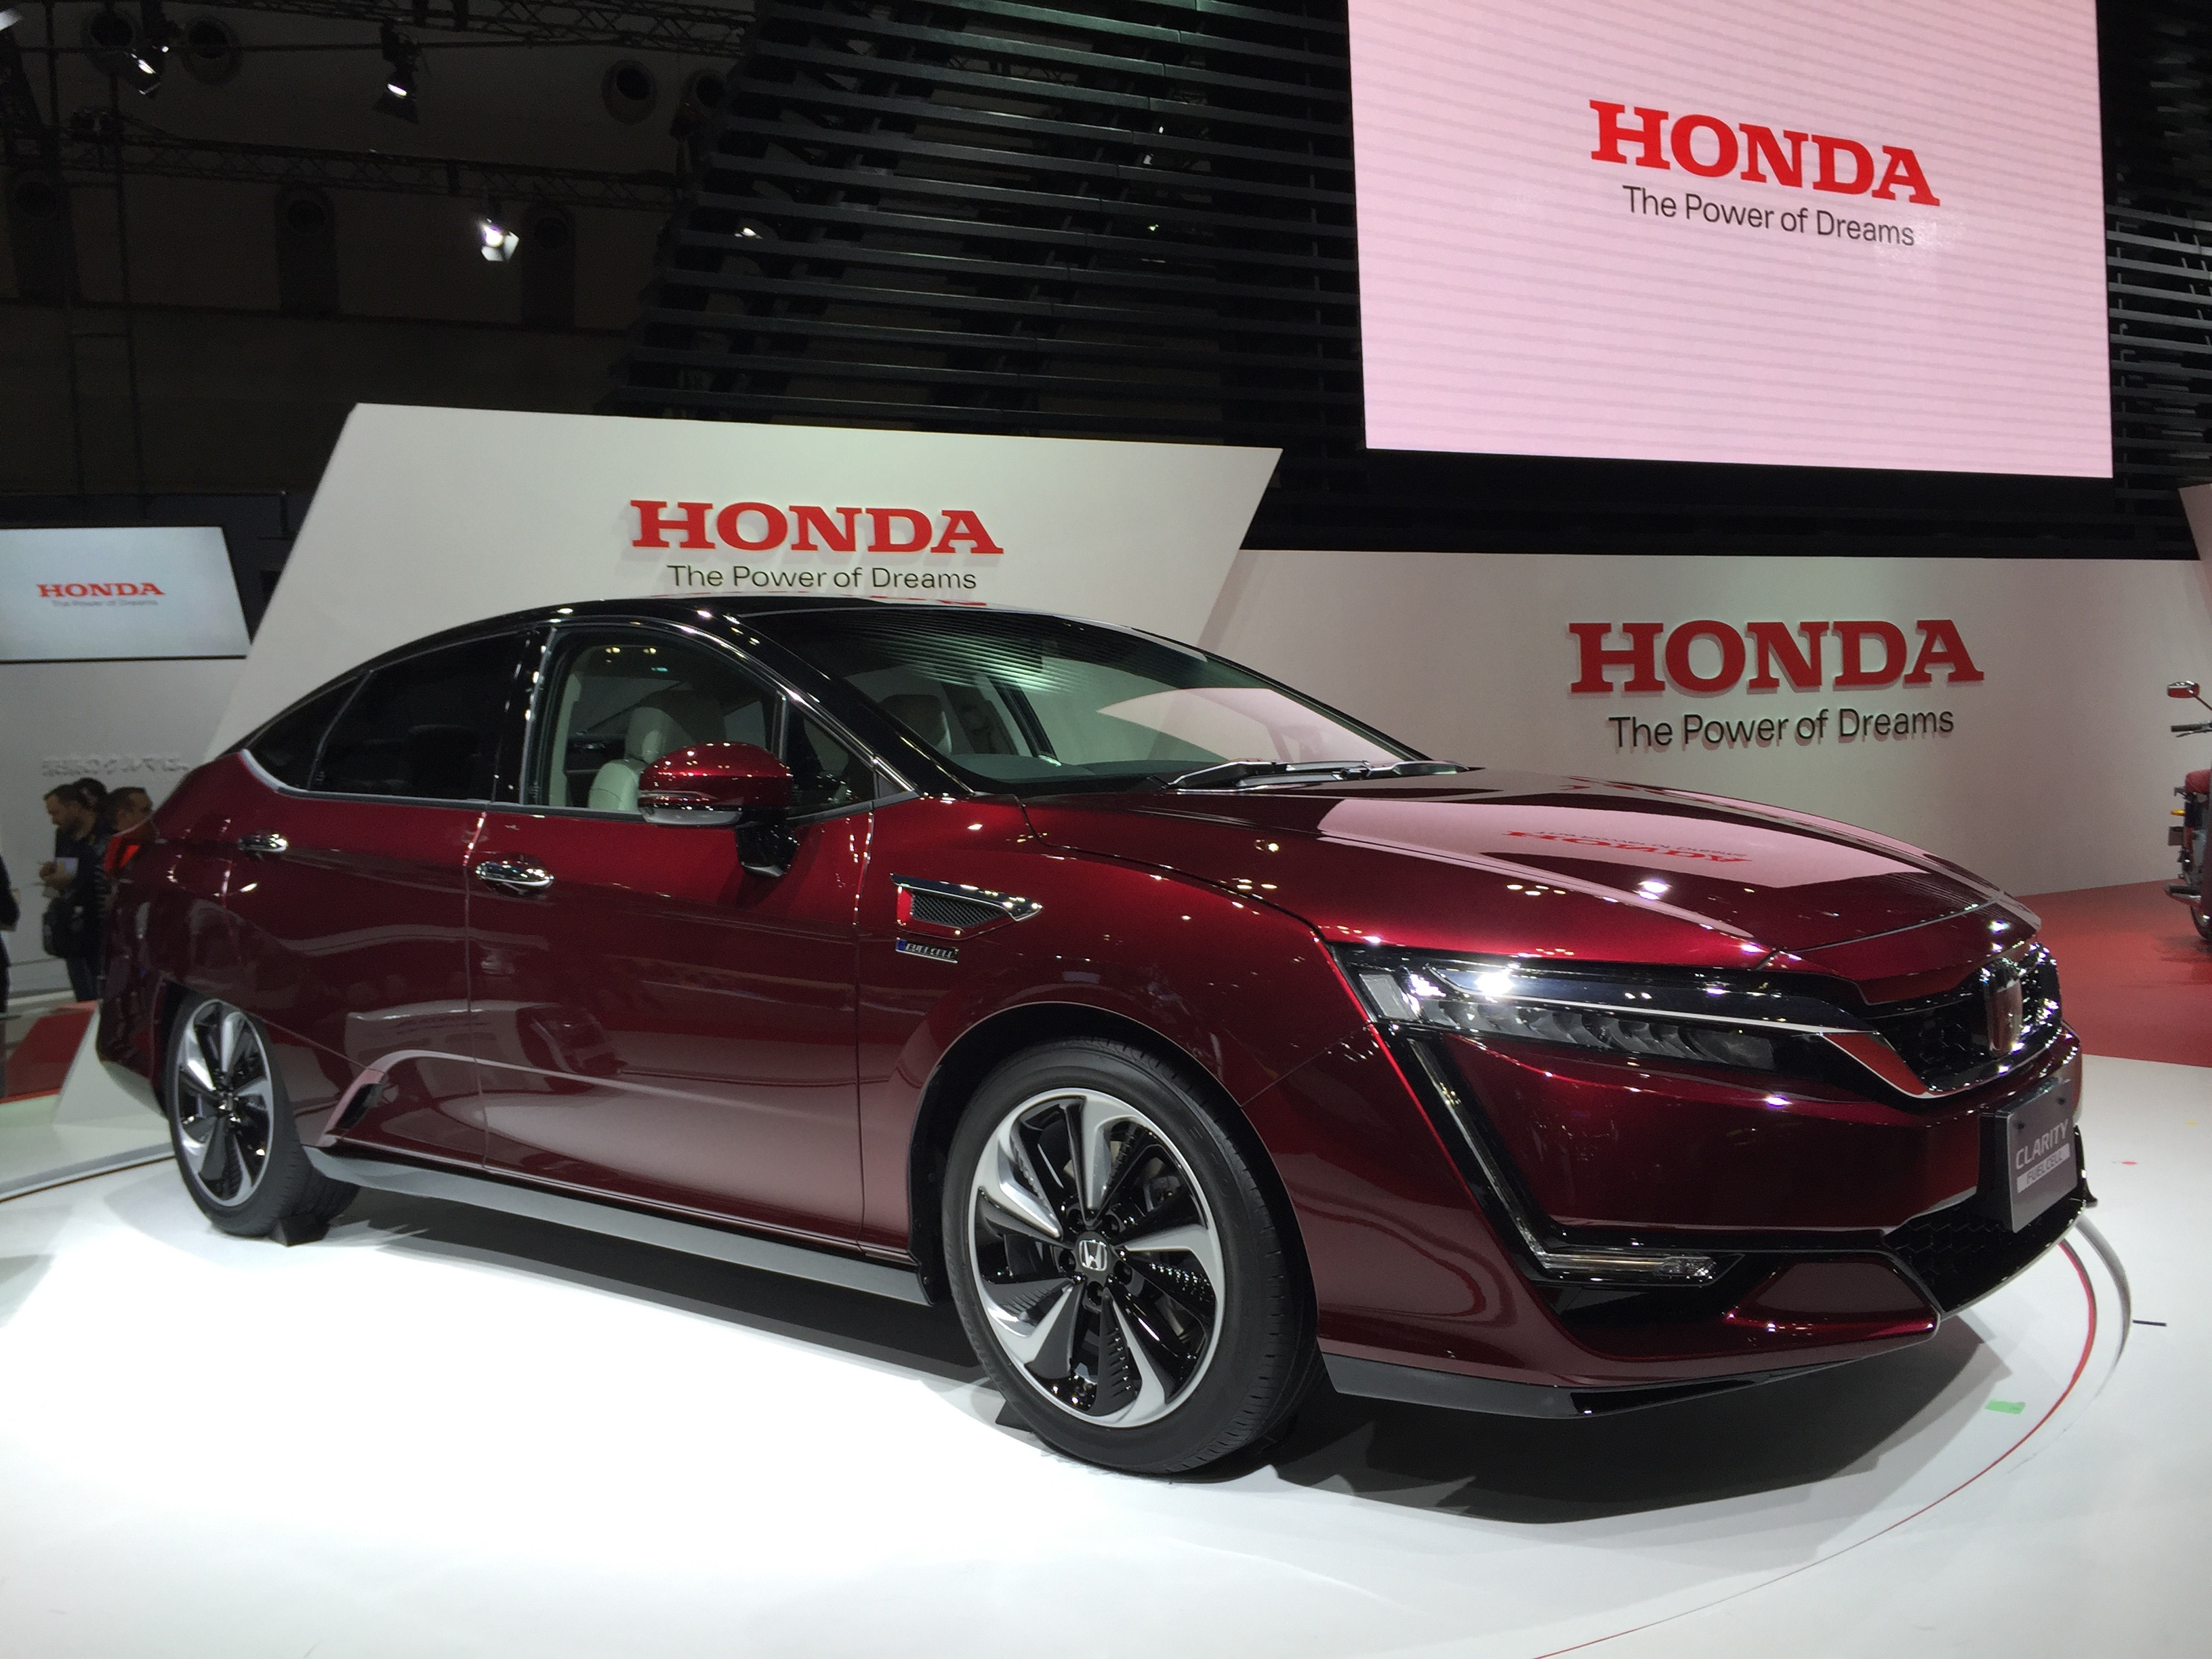 Honda Insight exterior photo